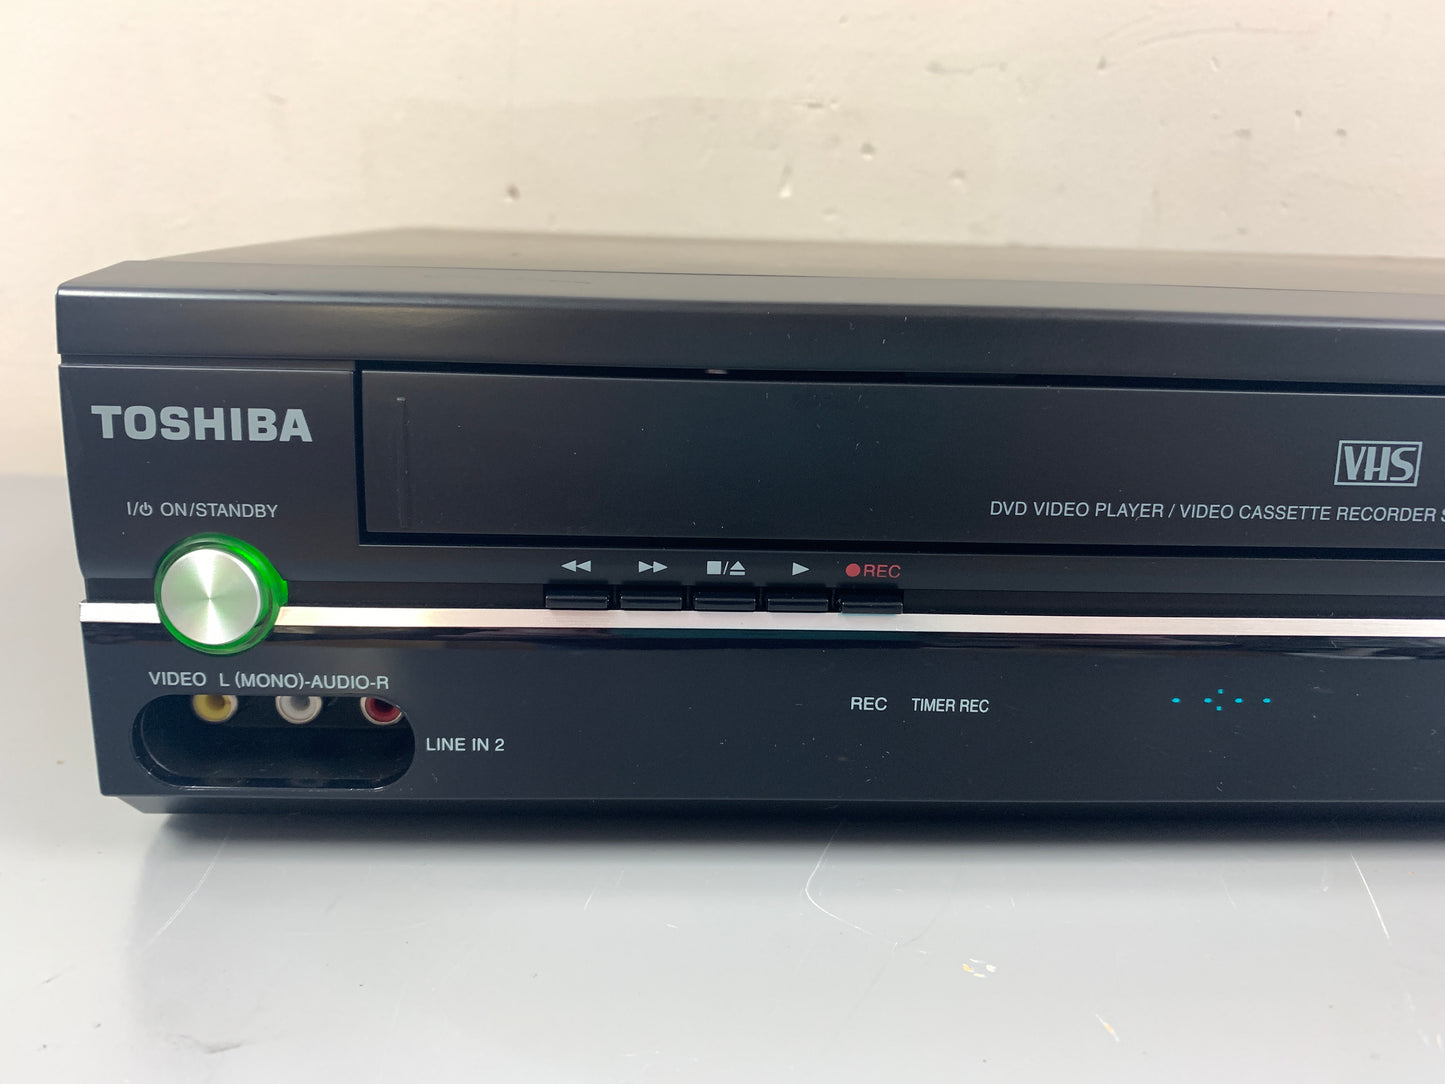 Toshiba SD-V296 DVD/VCR Combo Player